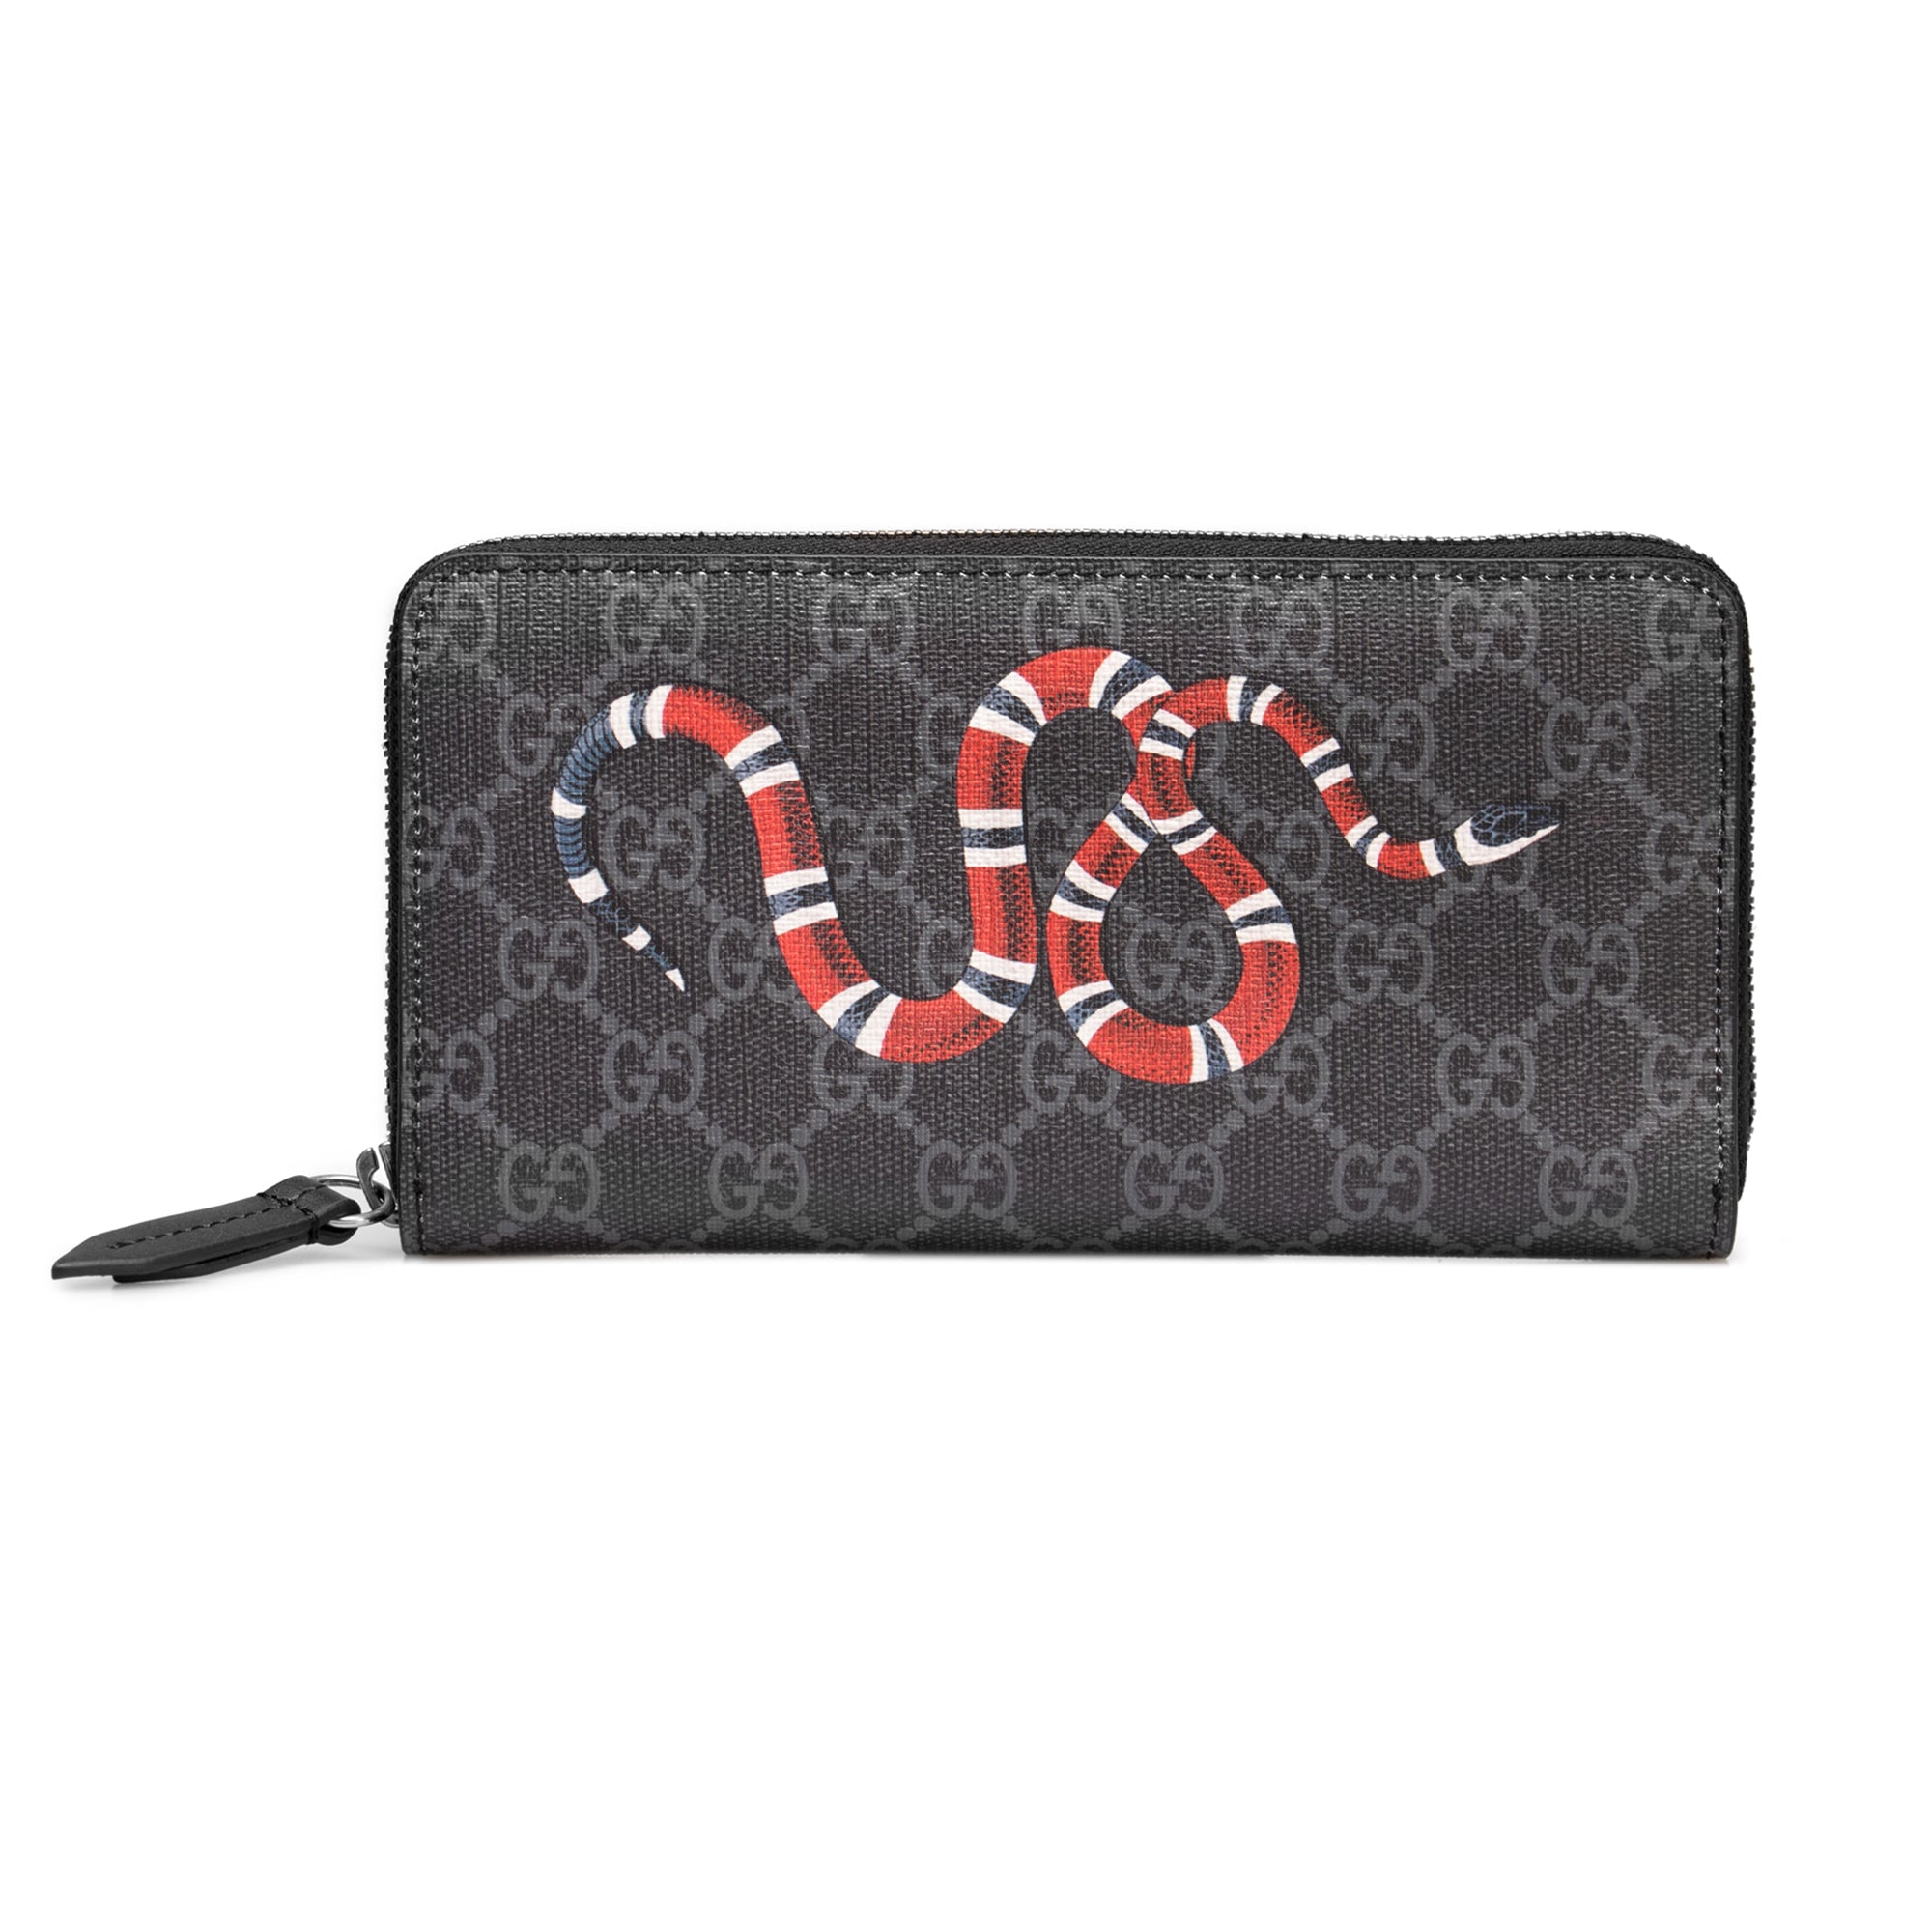 Gucci Kingsnake print GG Supreme Grey zip around wallet